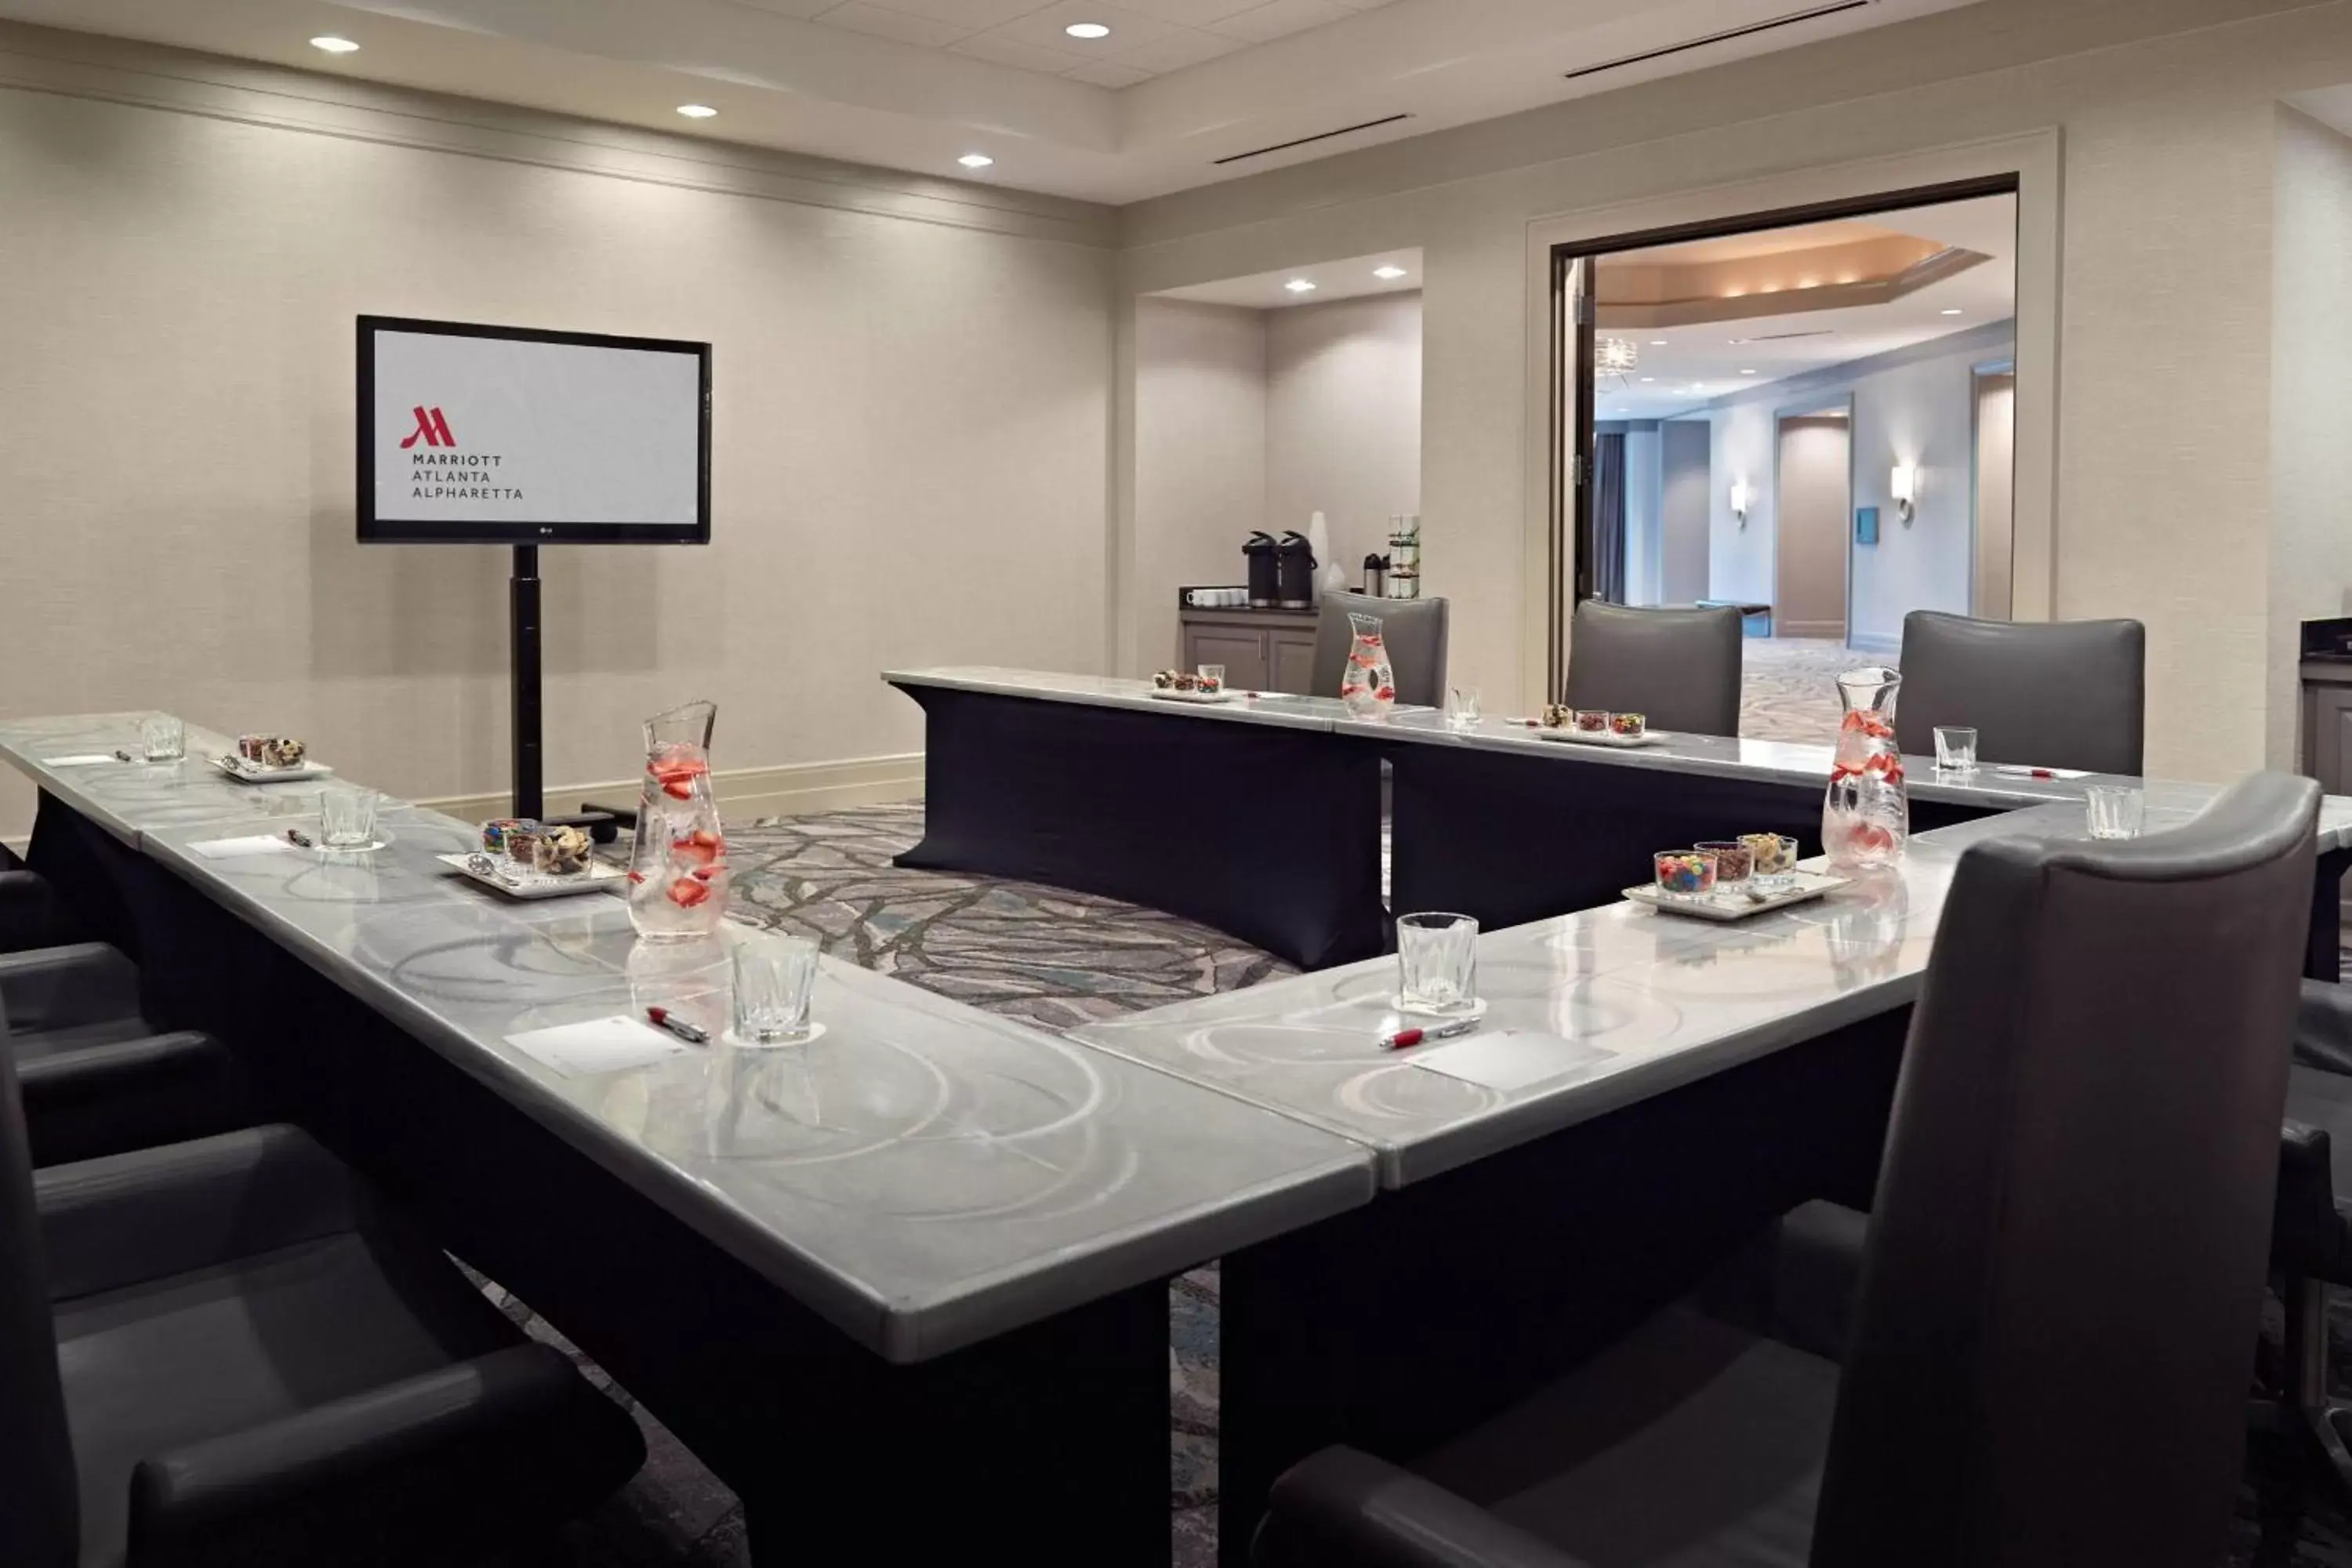 Meeting/conference room, Restaurant/Places to Eat in Atlanta Marriott Alpharetta